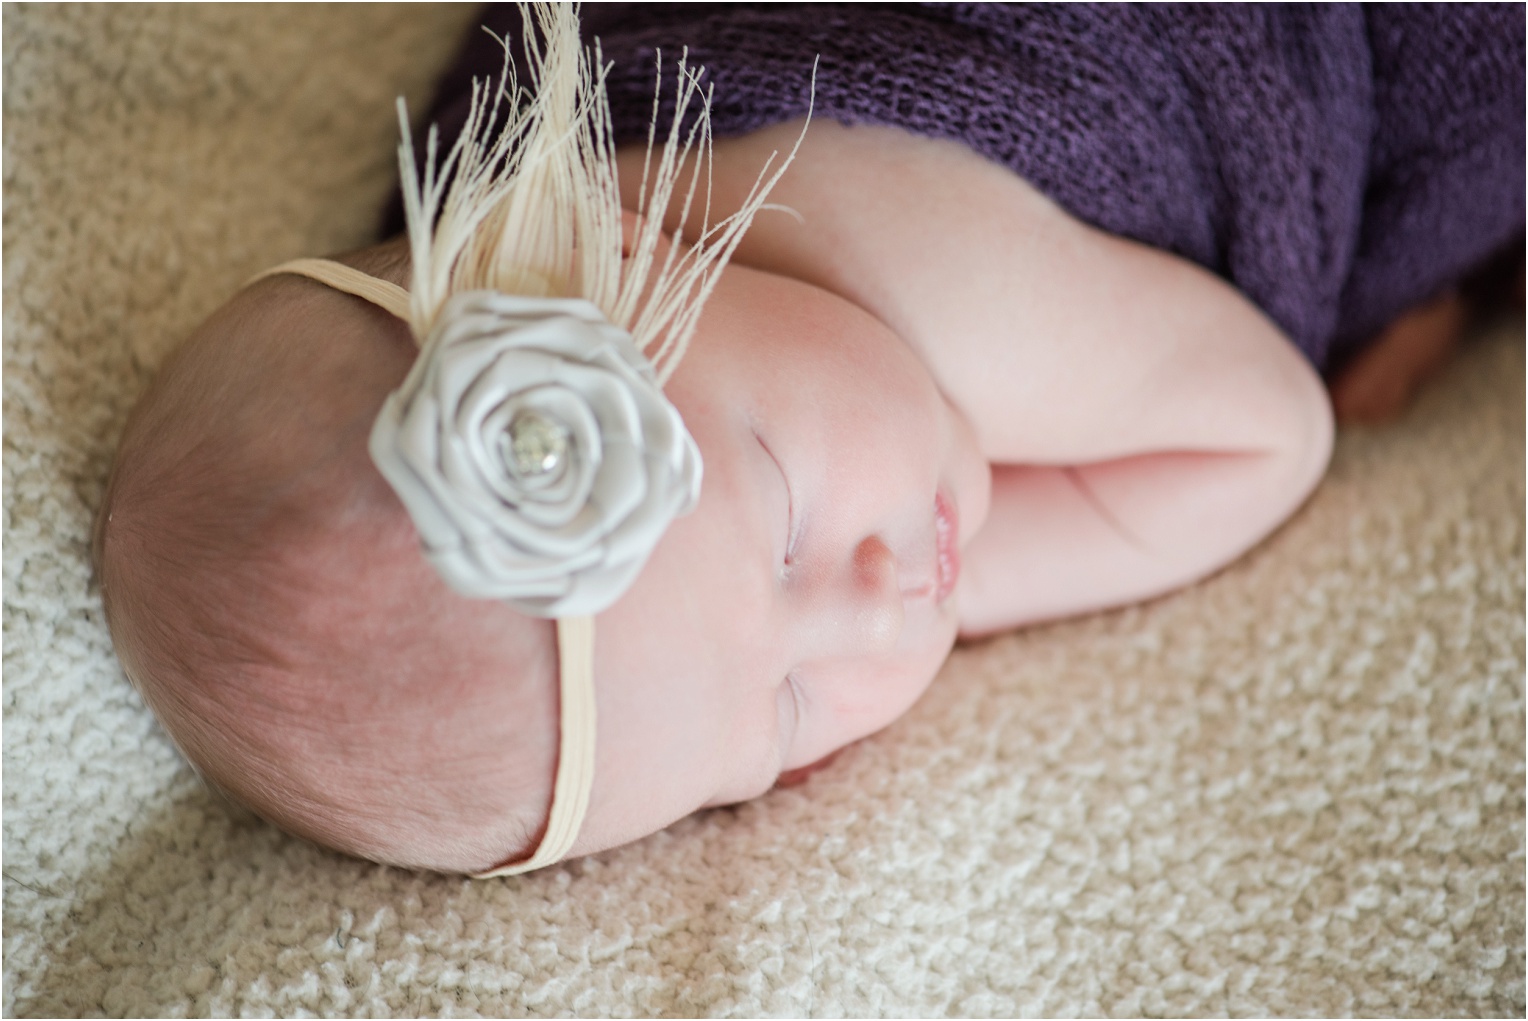 Janes Newborn Photography baby girl in purple